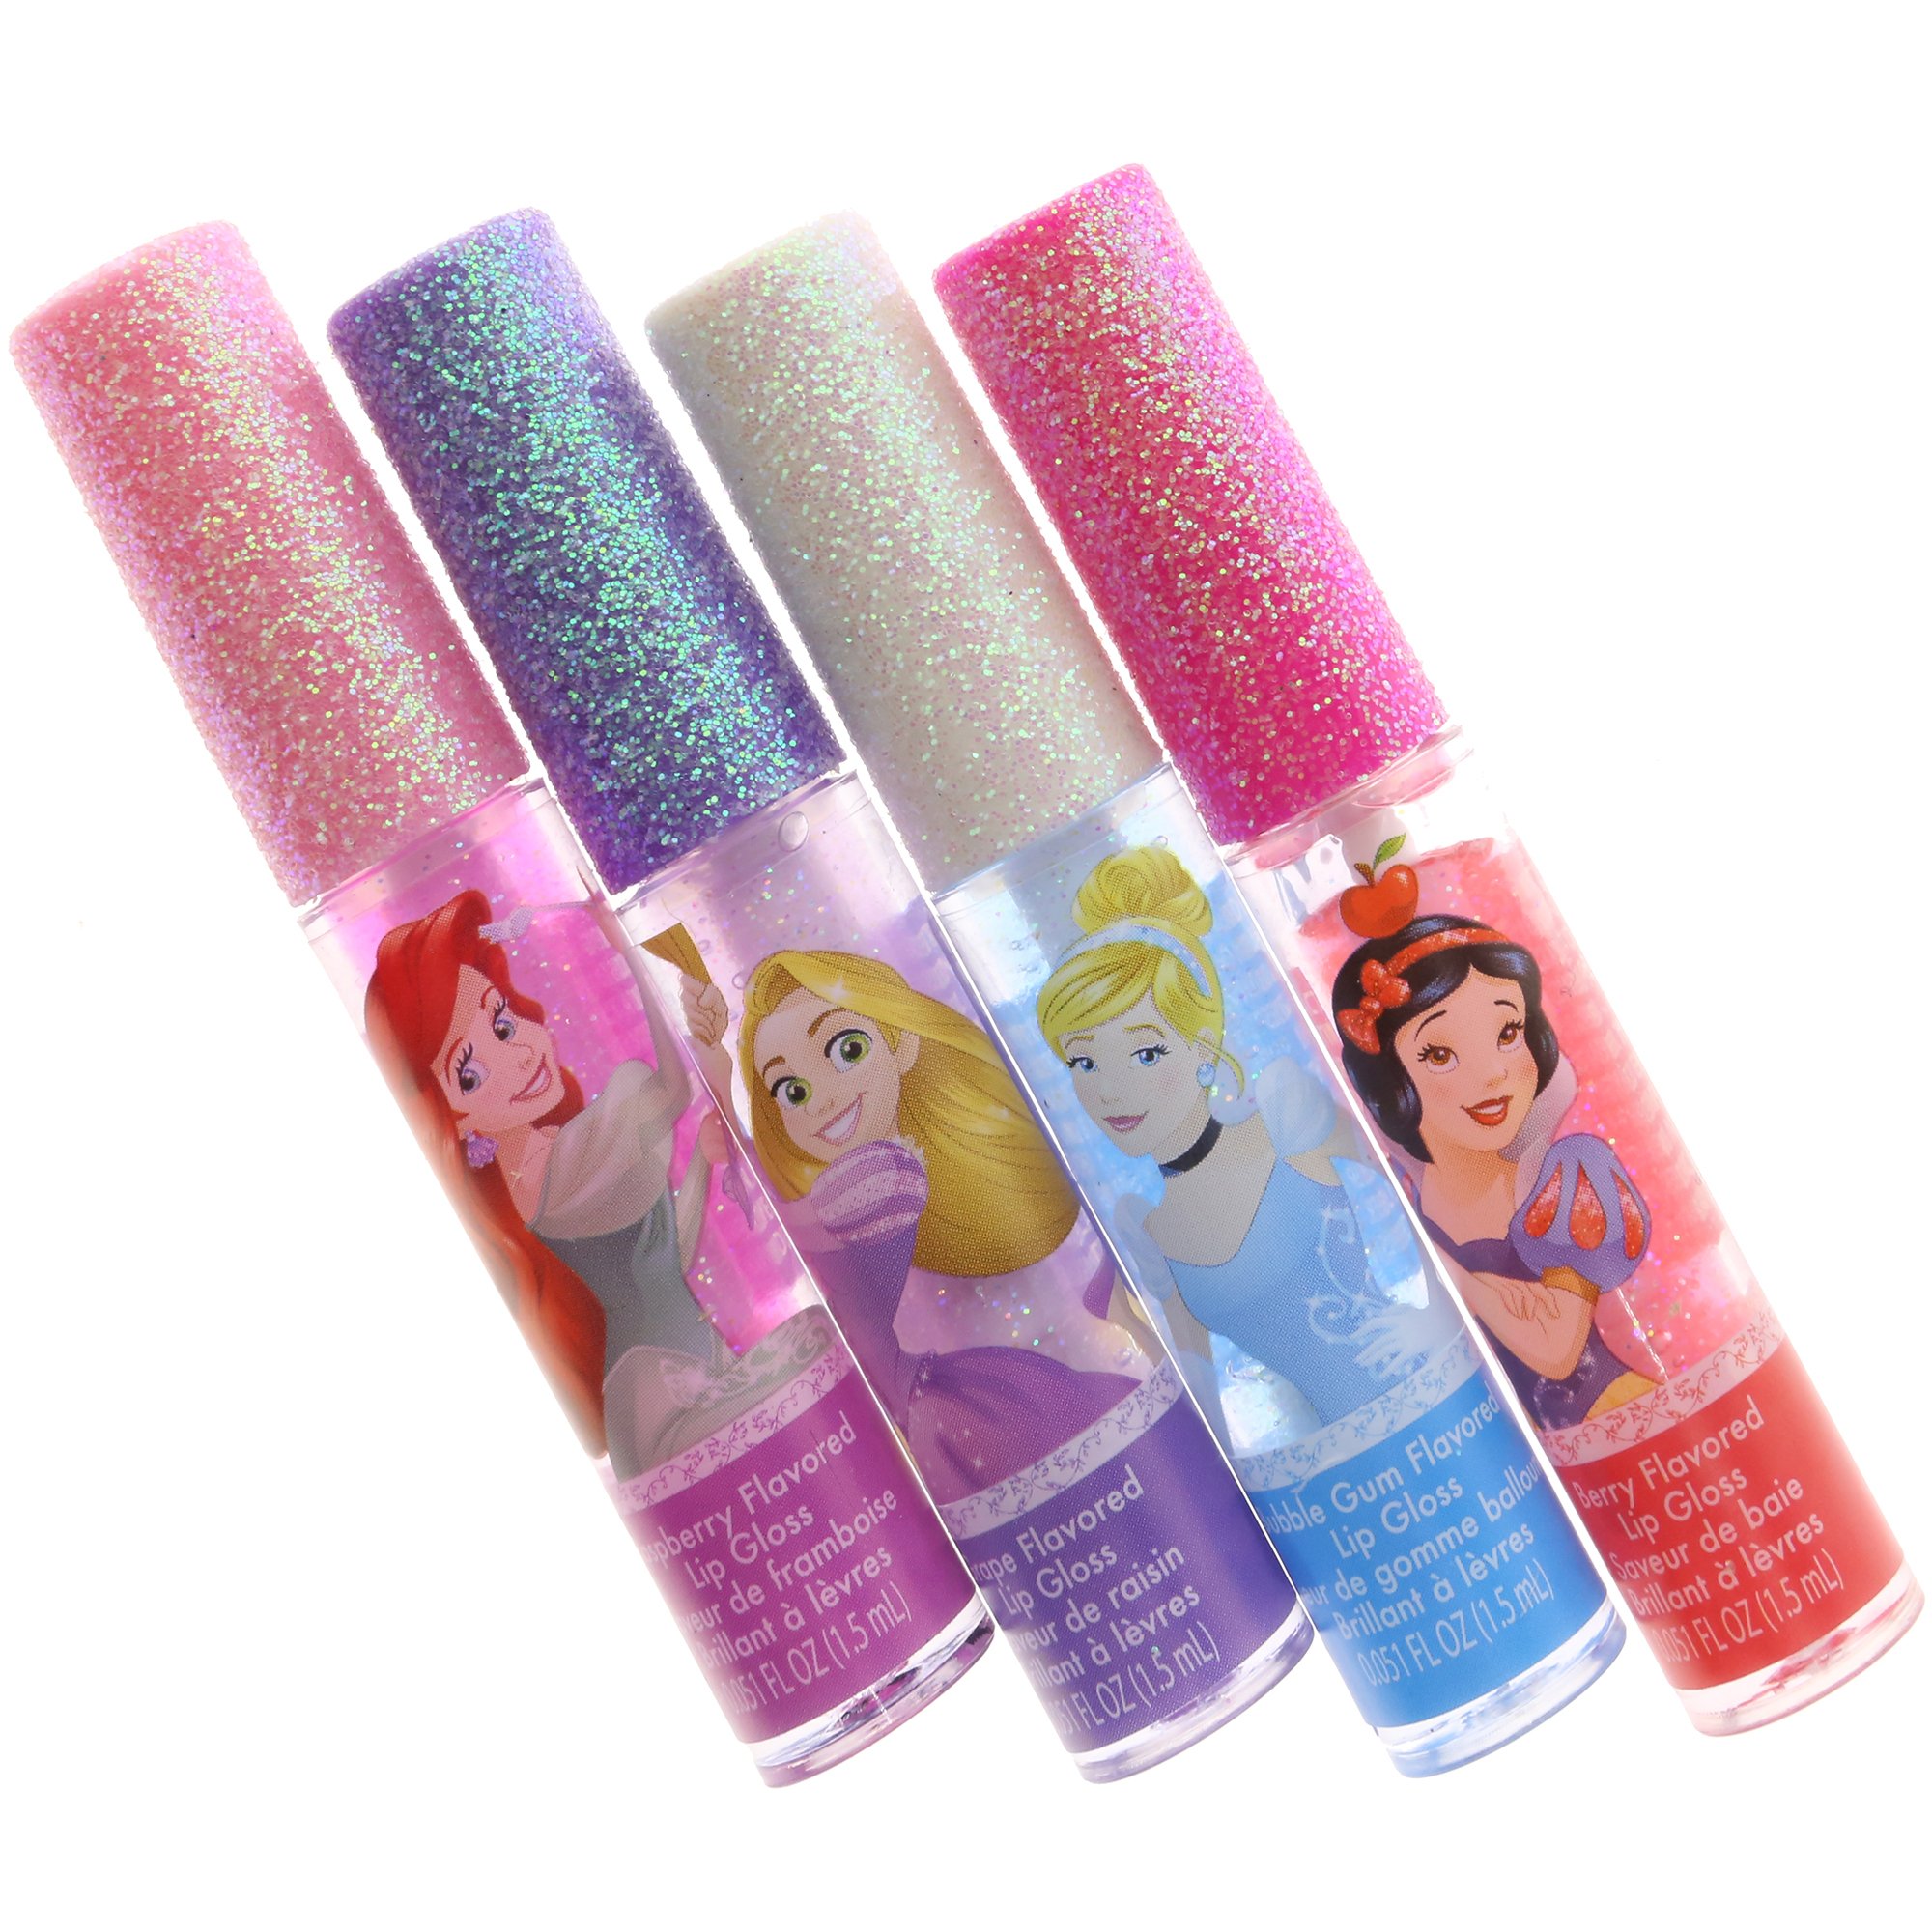 Townley Girl Disney Princess Super Sparkly Lip Gloss Set, 0.05 Fl Oz (Pack of 7)